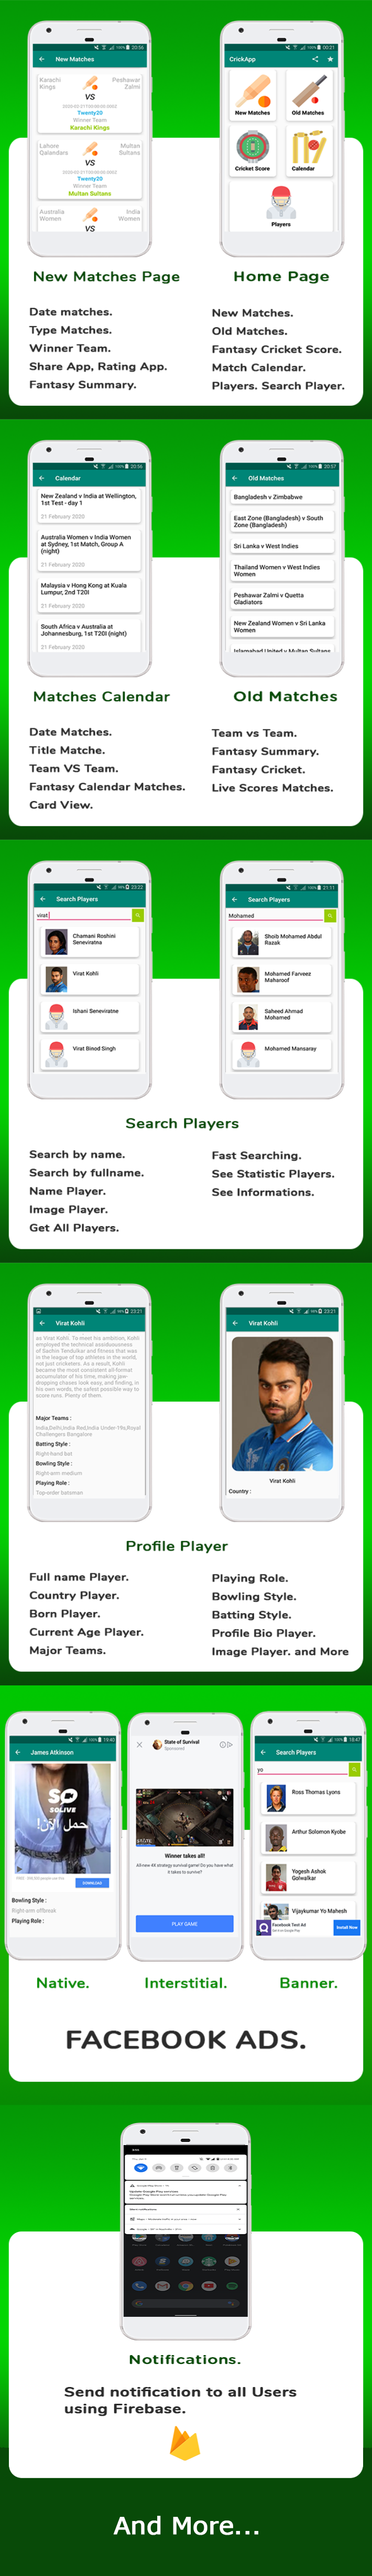 CrickApp Live Cricket Score - Fantasy Cricket & Leagues App - Player Statistics - Match Calendar - 3